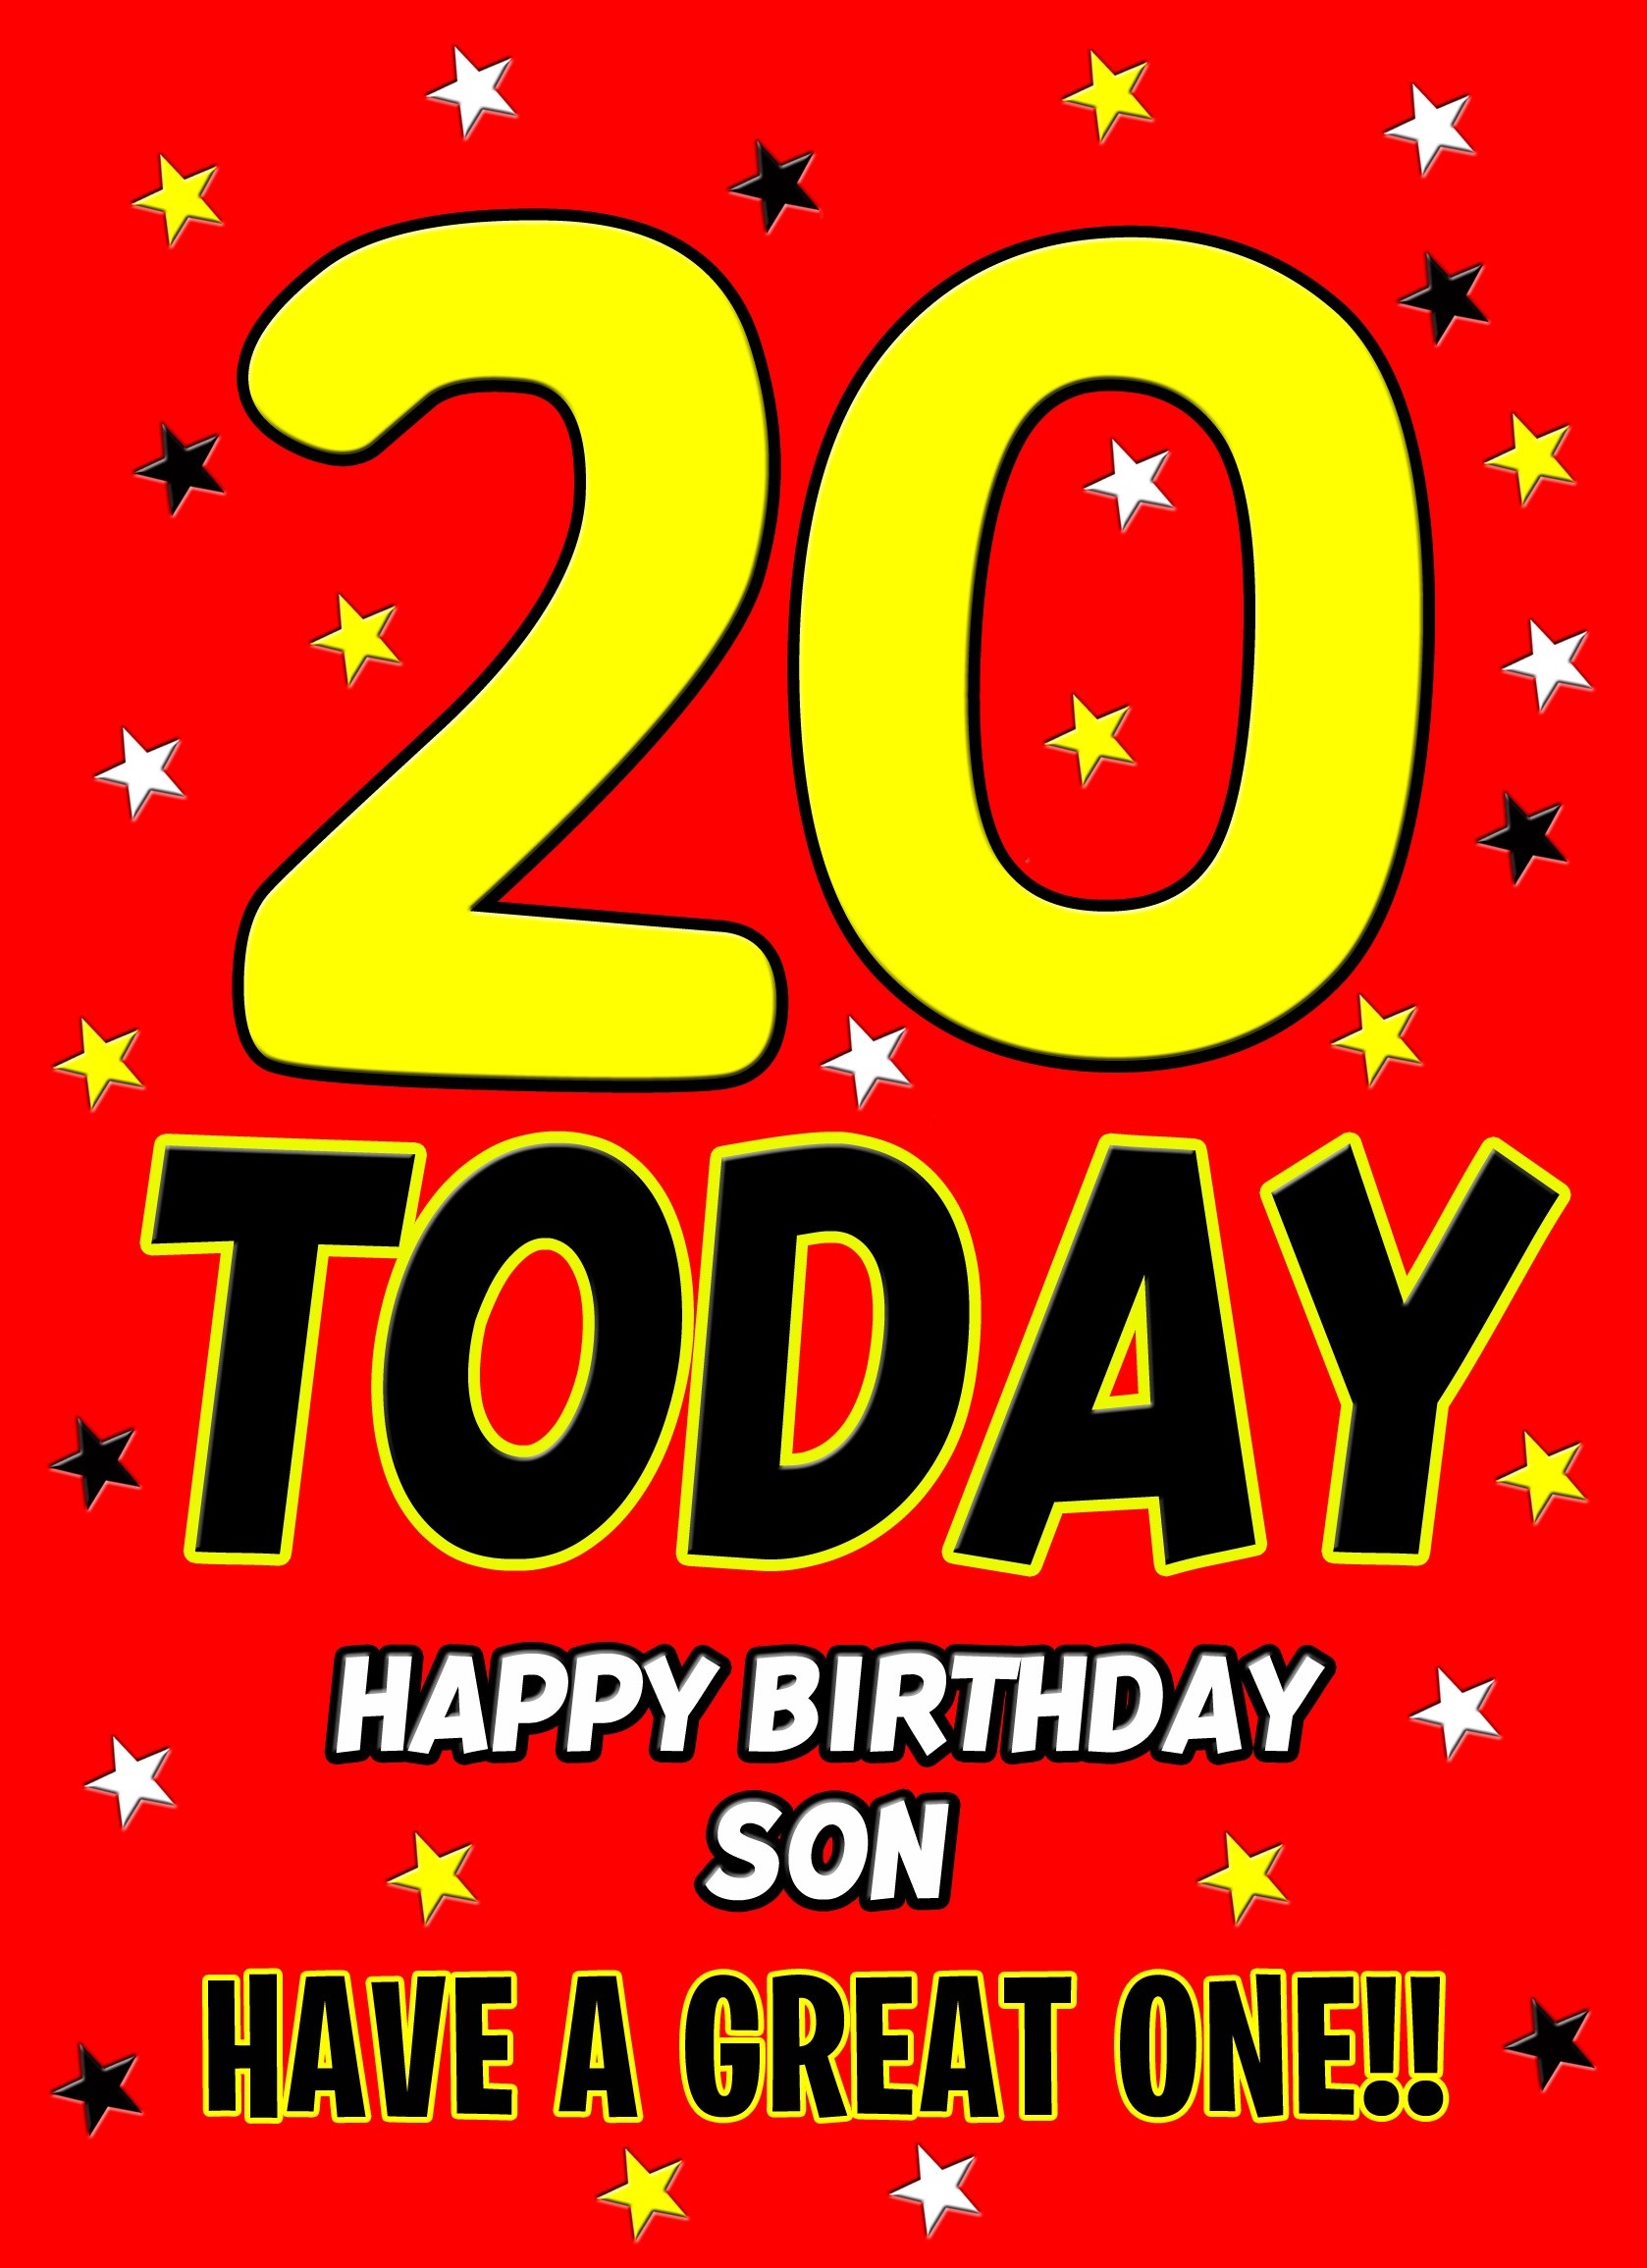 20 Today Birthday Card (Son)